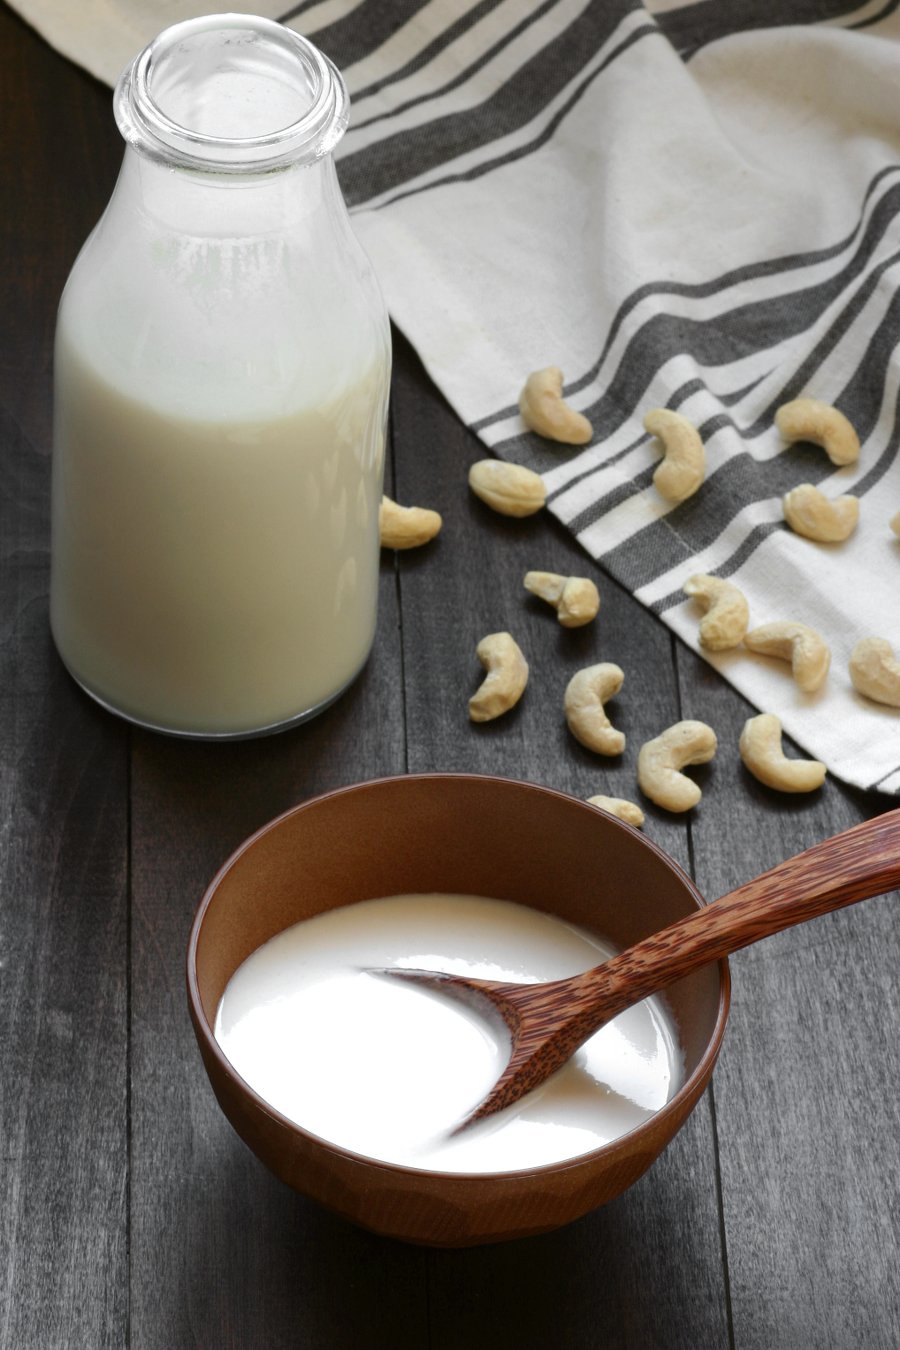 Make your own creamy, homemade Cashew Milk and Cashew Cream with this straightforward, 3-ingredient recipe.